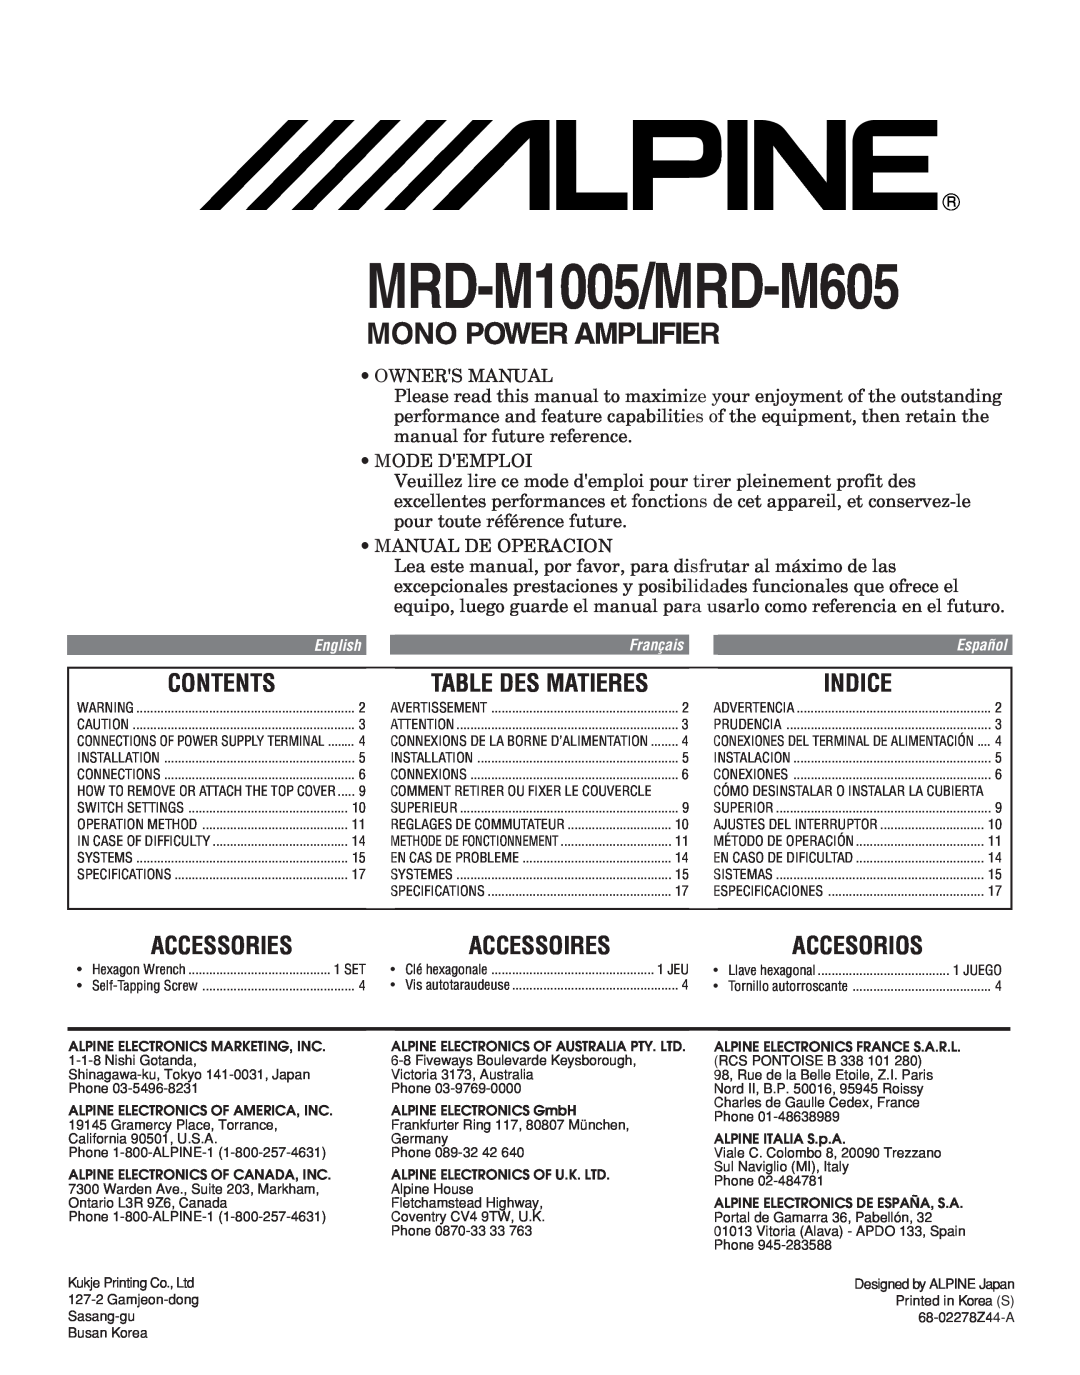 Alpine MRD-M1005 owner manual Contents, Indice, Accessories, Accessoires, Accesorios, Table Des Matieres, Mode Demploi 